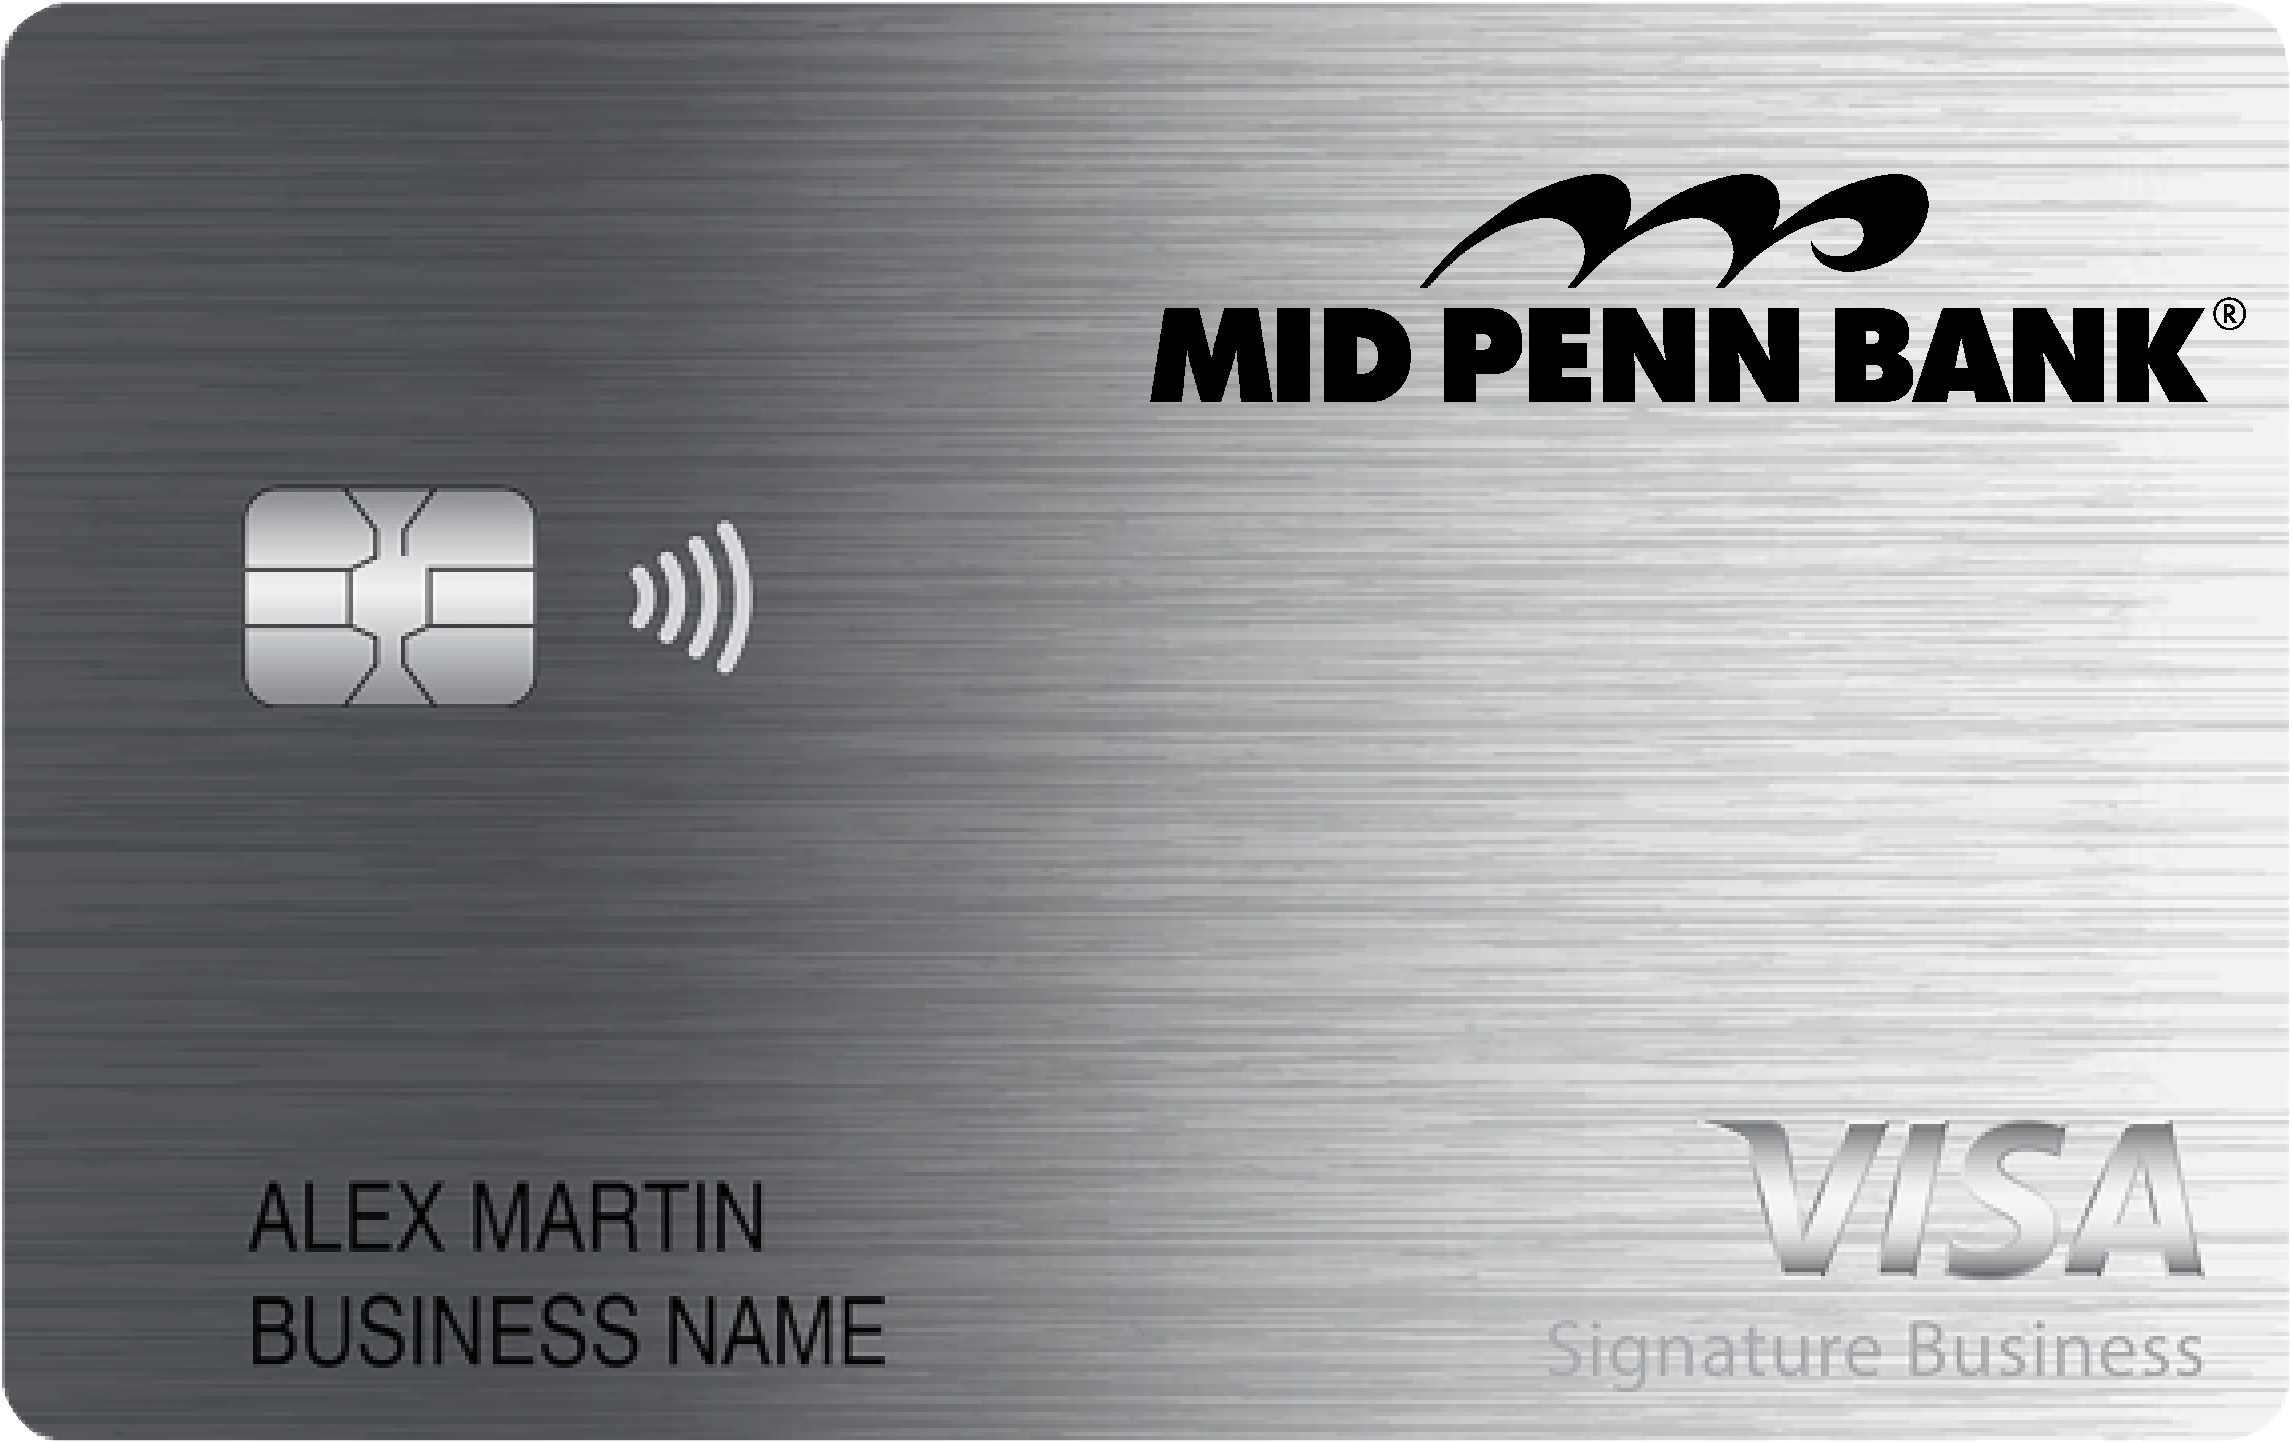 Mid Penn Bank Smart Business Rewards Card